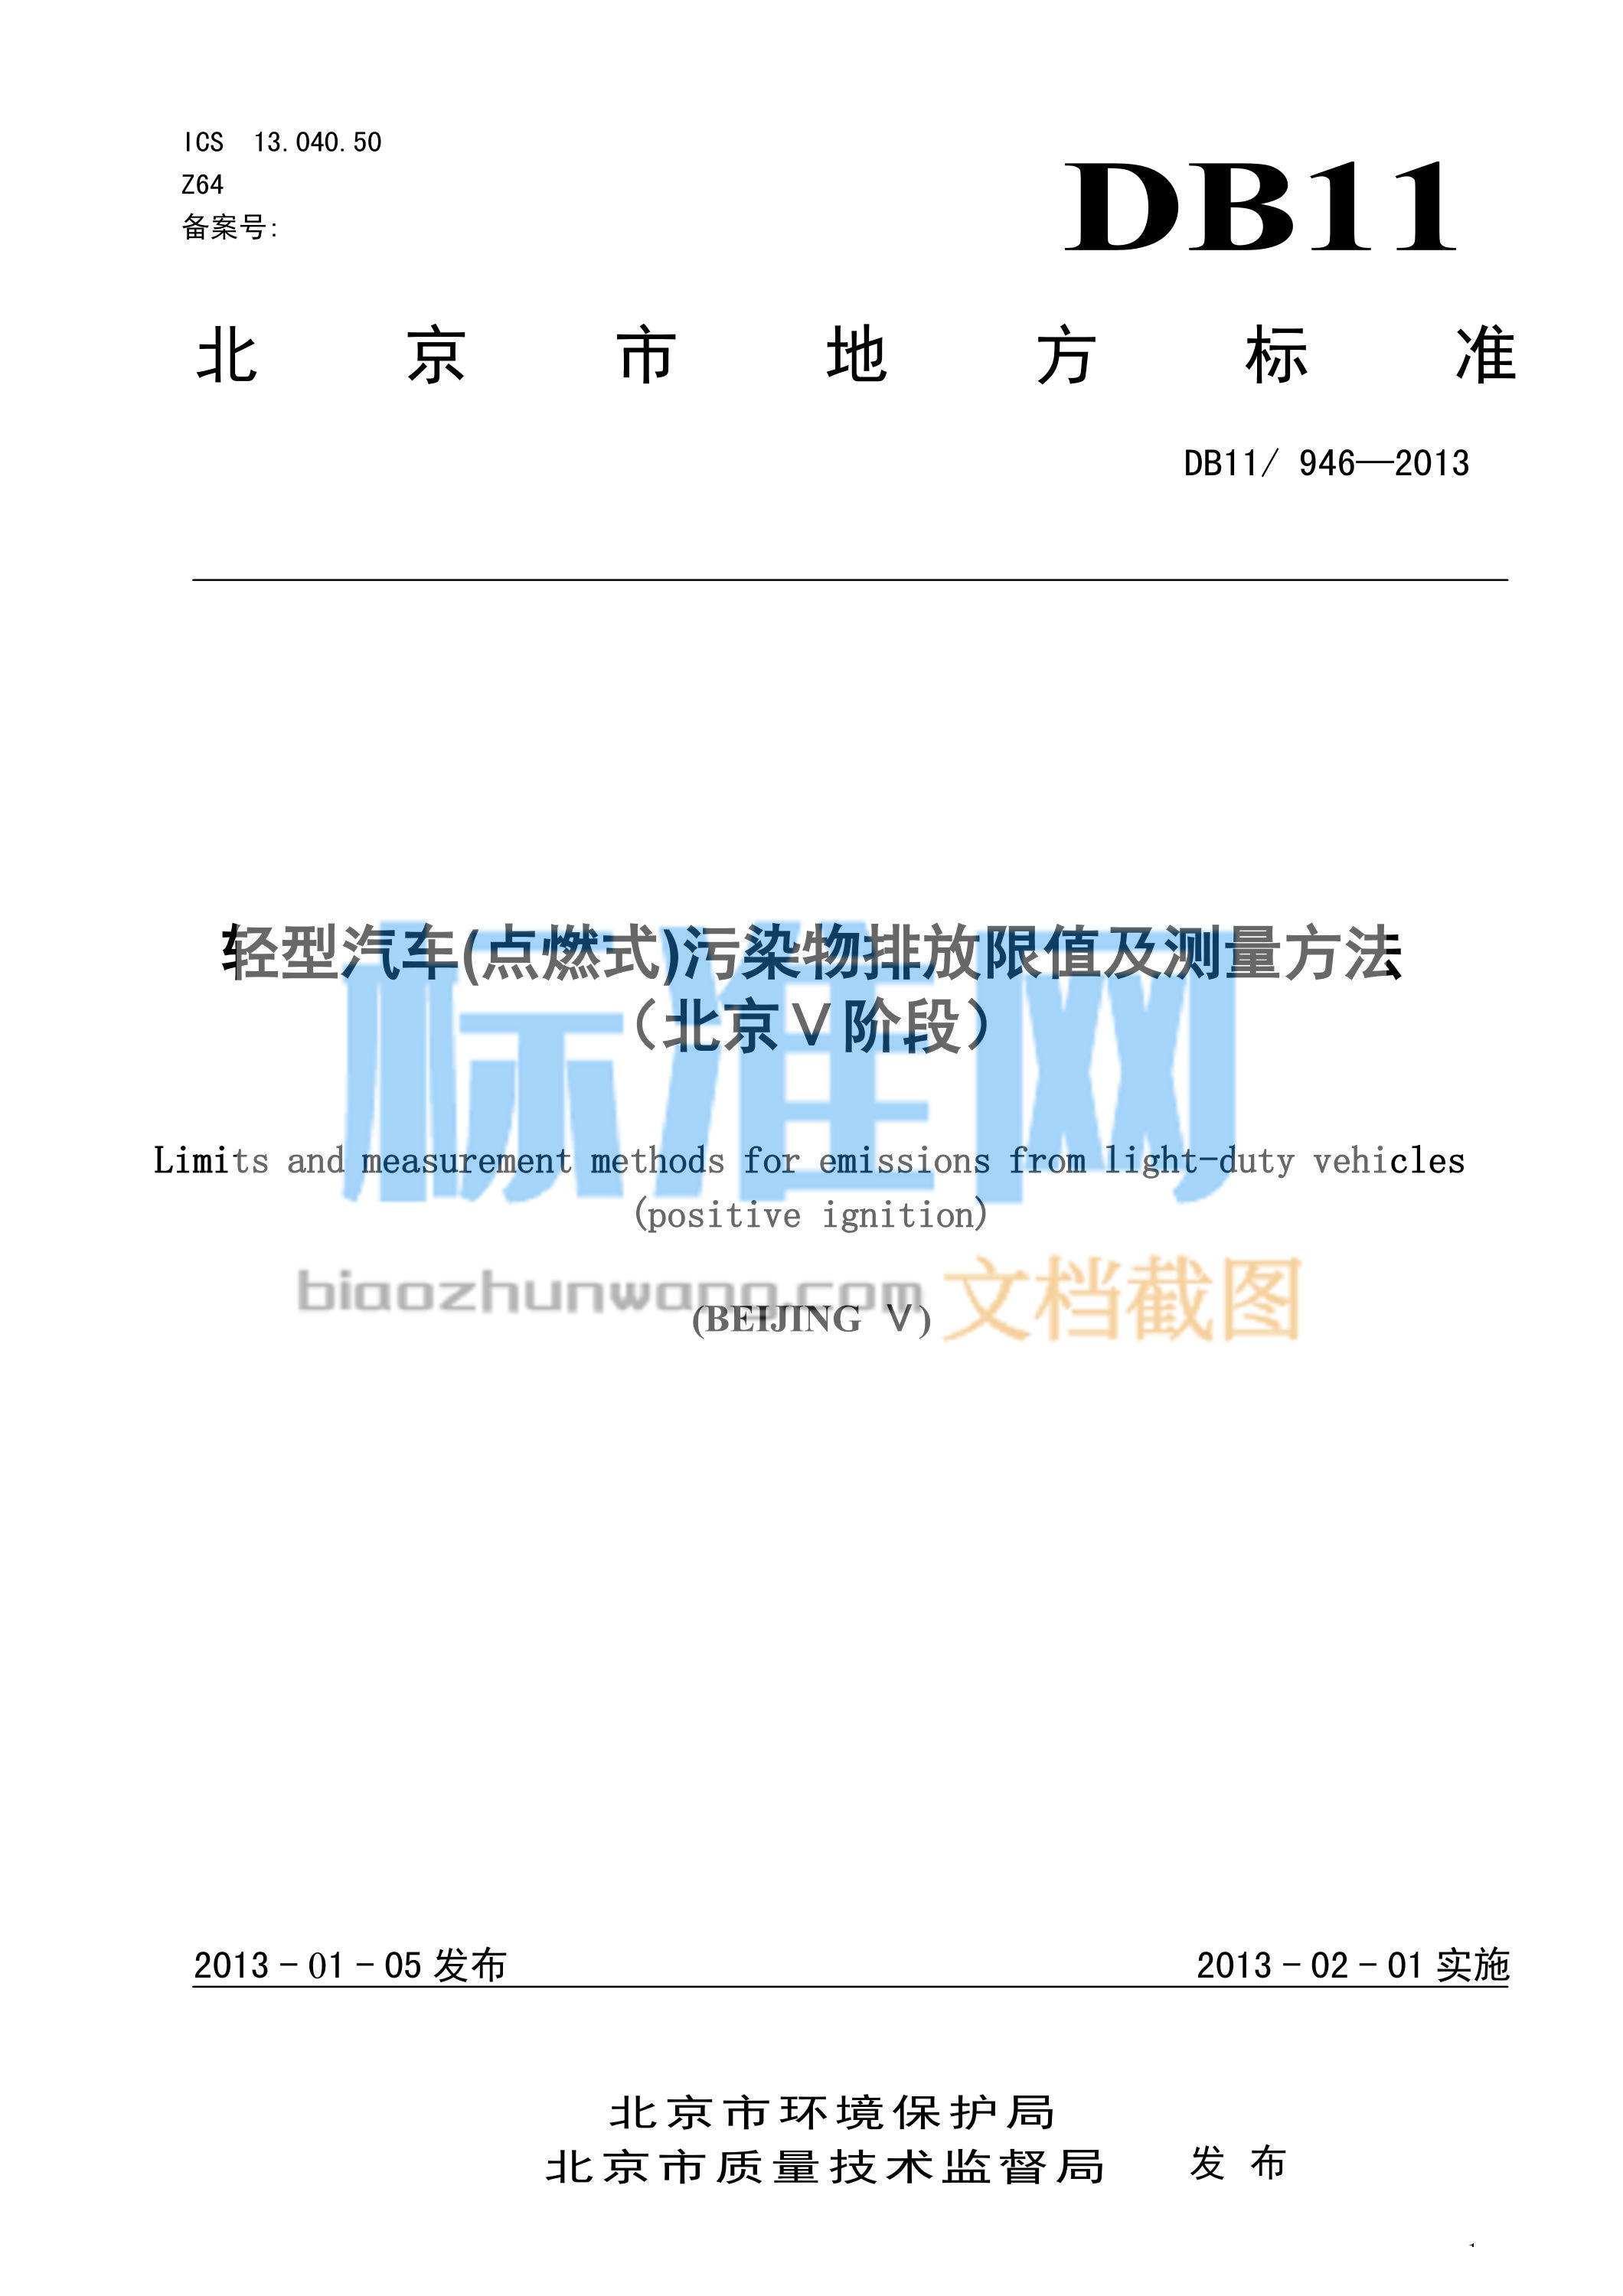 DB11/946-2013 轻型汽车(点燃式)污染物排放限值及测量方法(北京Ⅴ阶段)